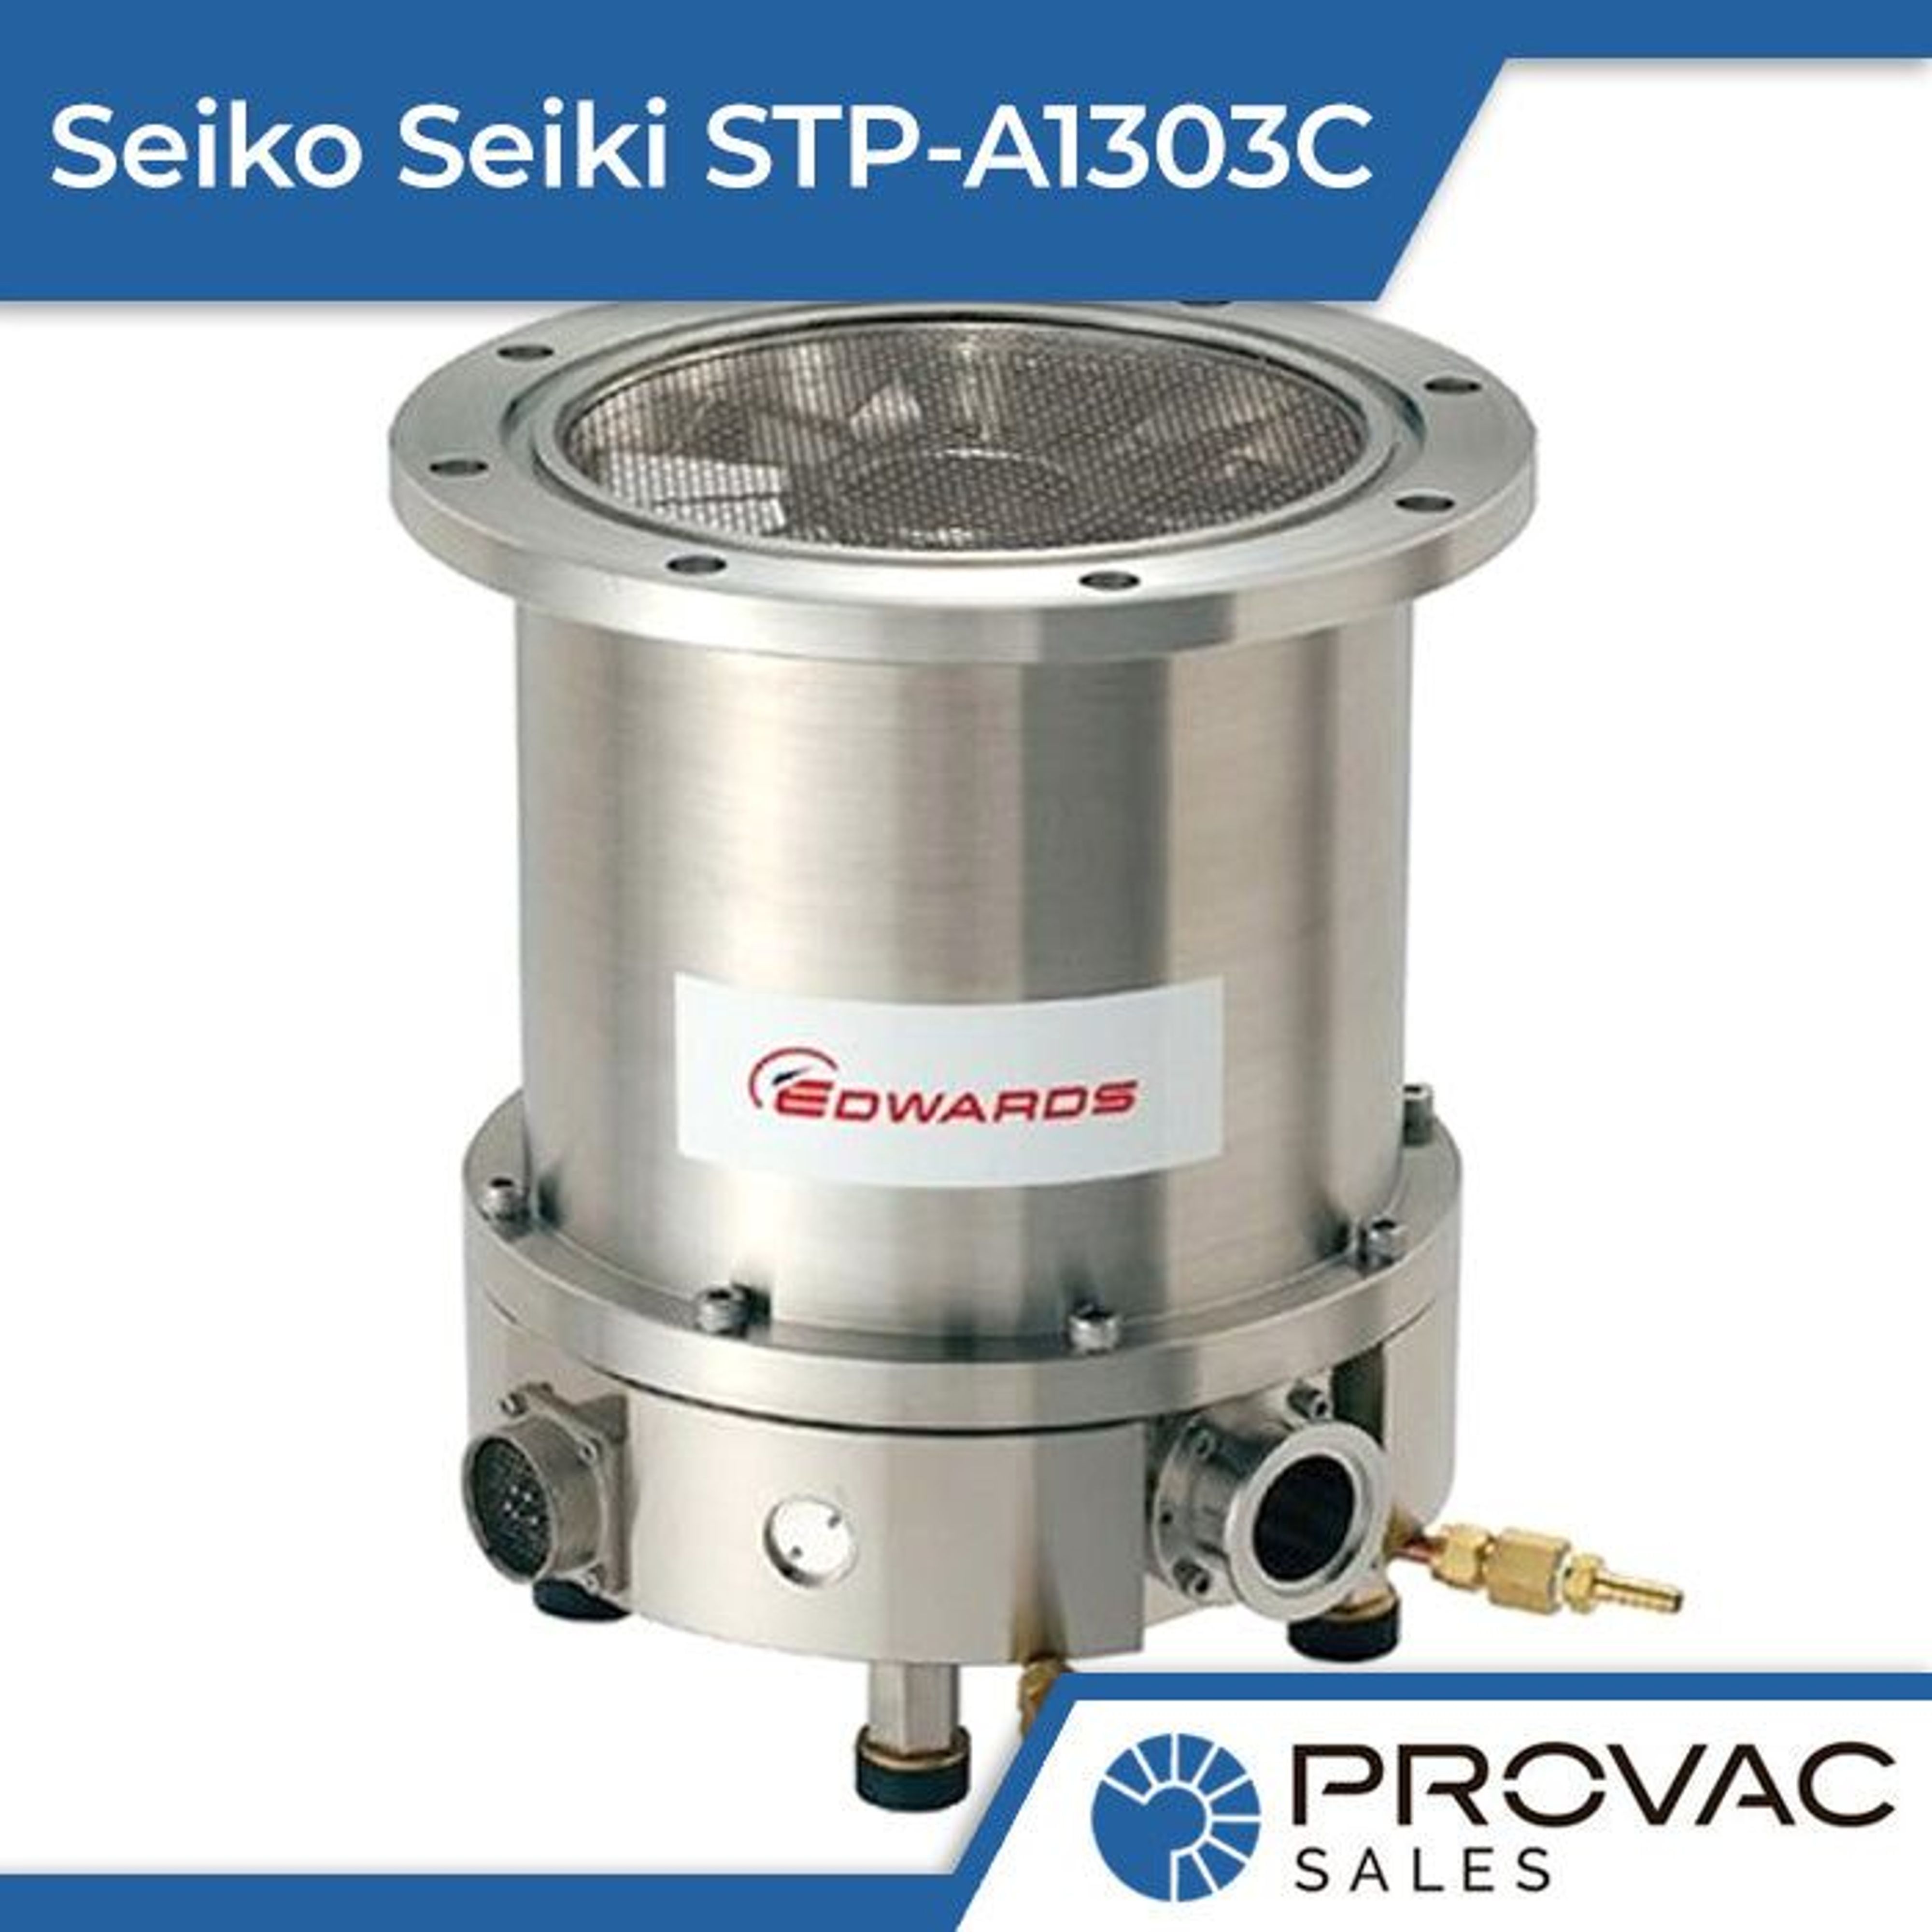 Seiko Seiki STP-A1303C Turbomolecular Pump Background